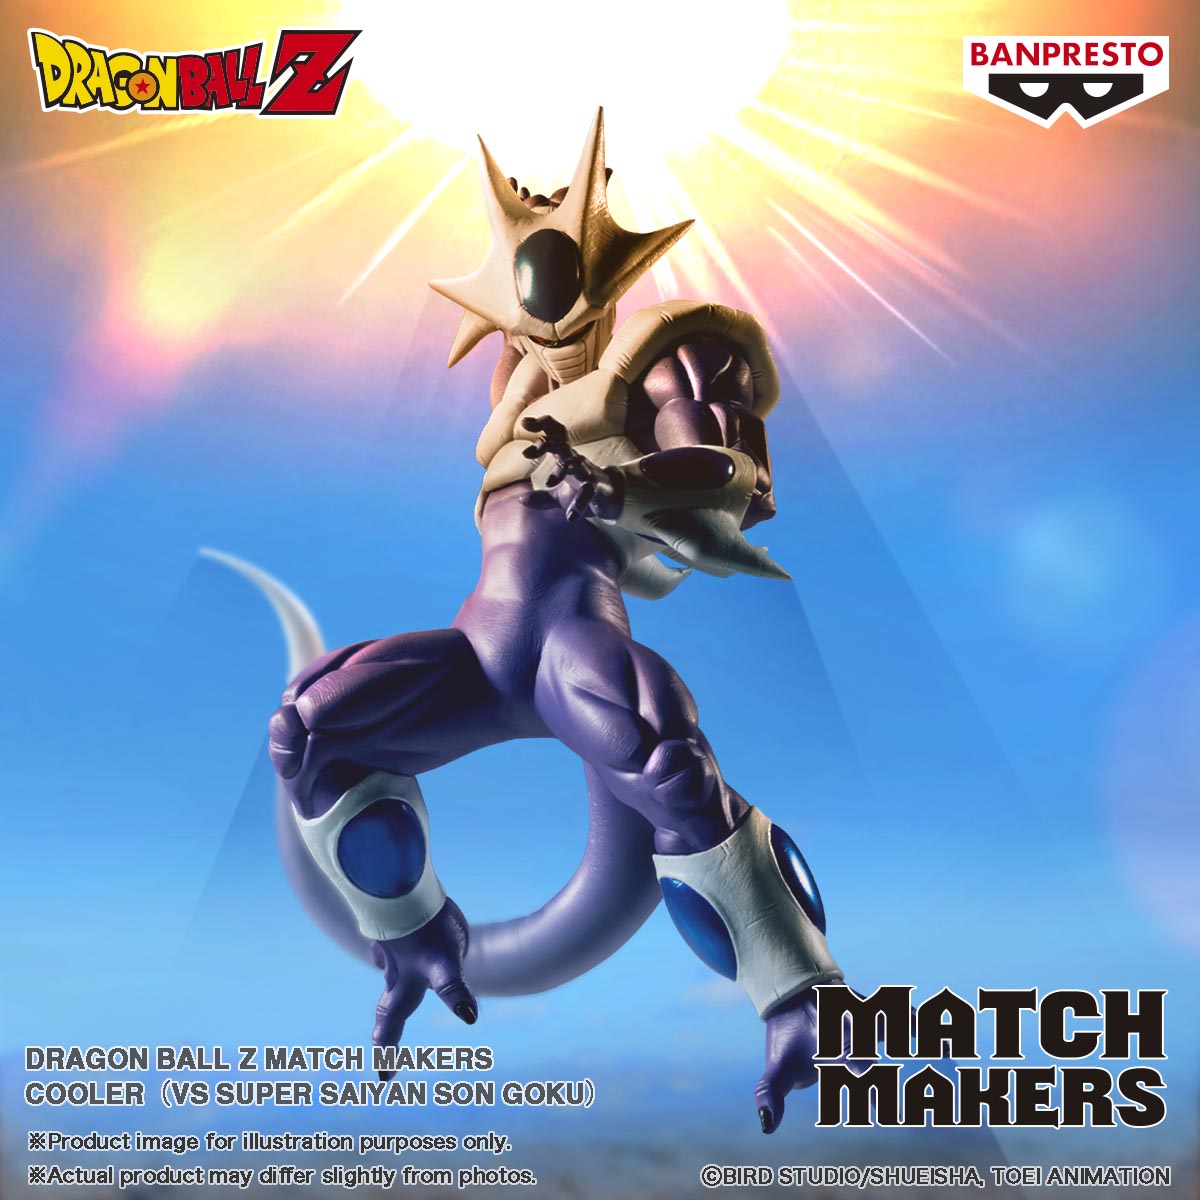 [PREORDER] DRAGON BALL Z MATCH MAKERS COOLER (VS SUPER SAIYAN SON GOKU)